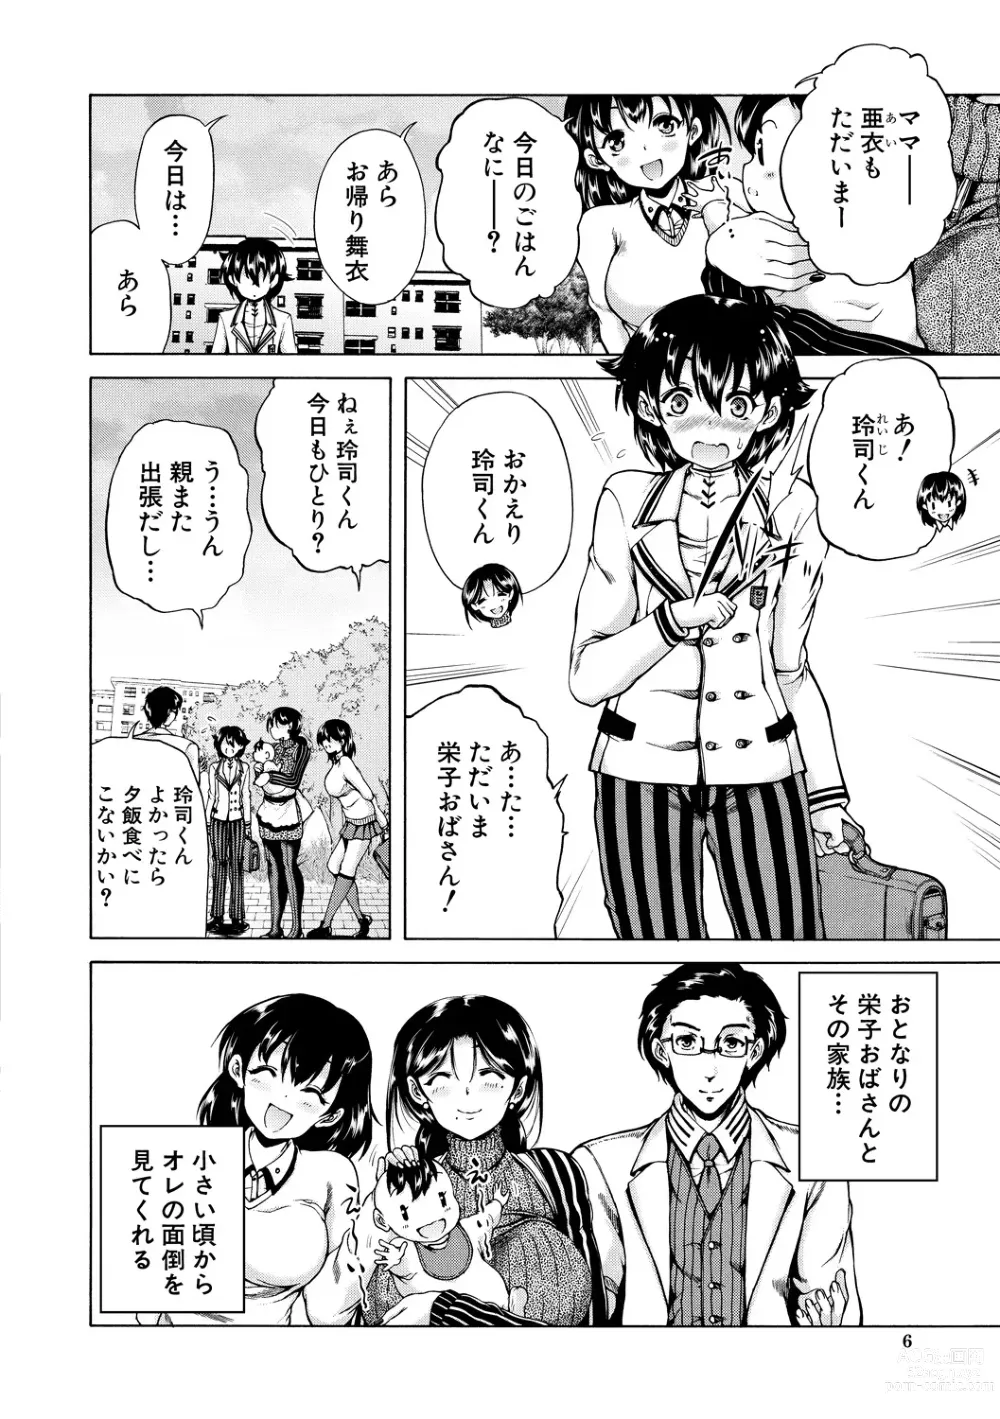 Page 6 of manga Maou Tensei Harem - Devil Reincarnation